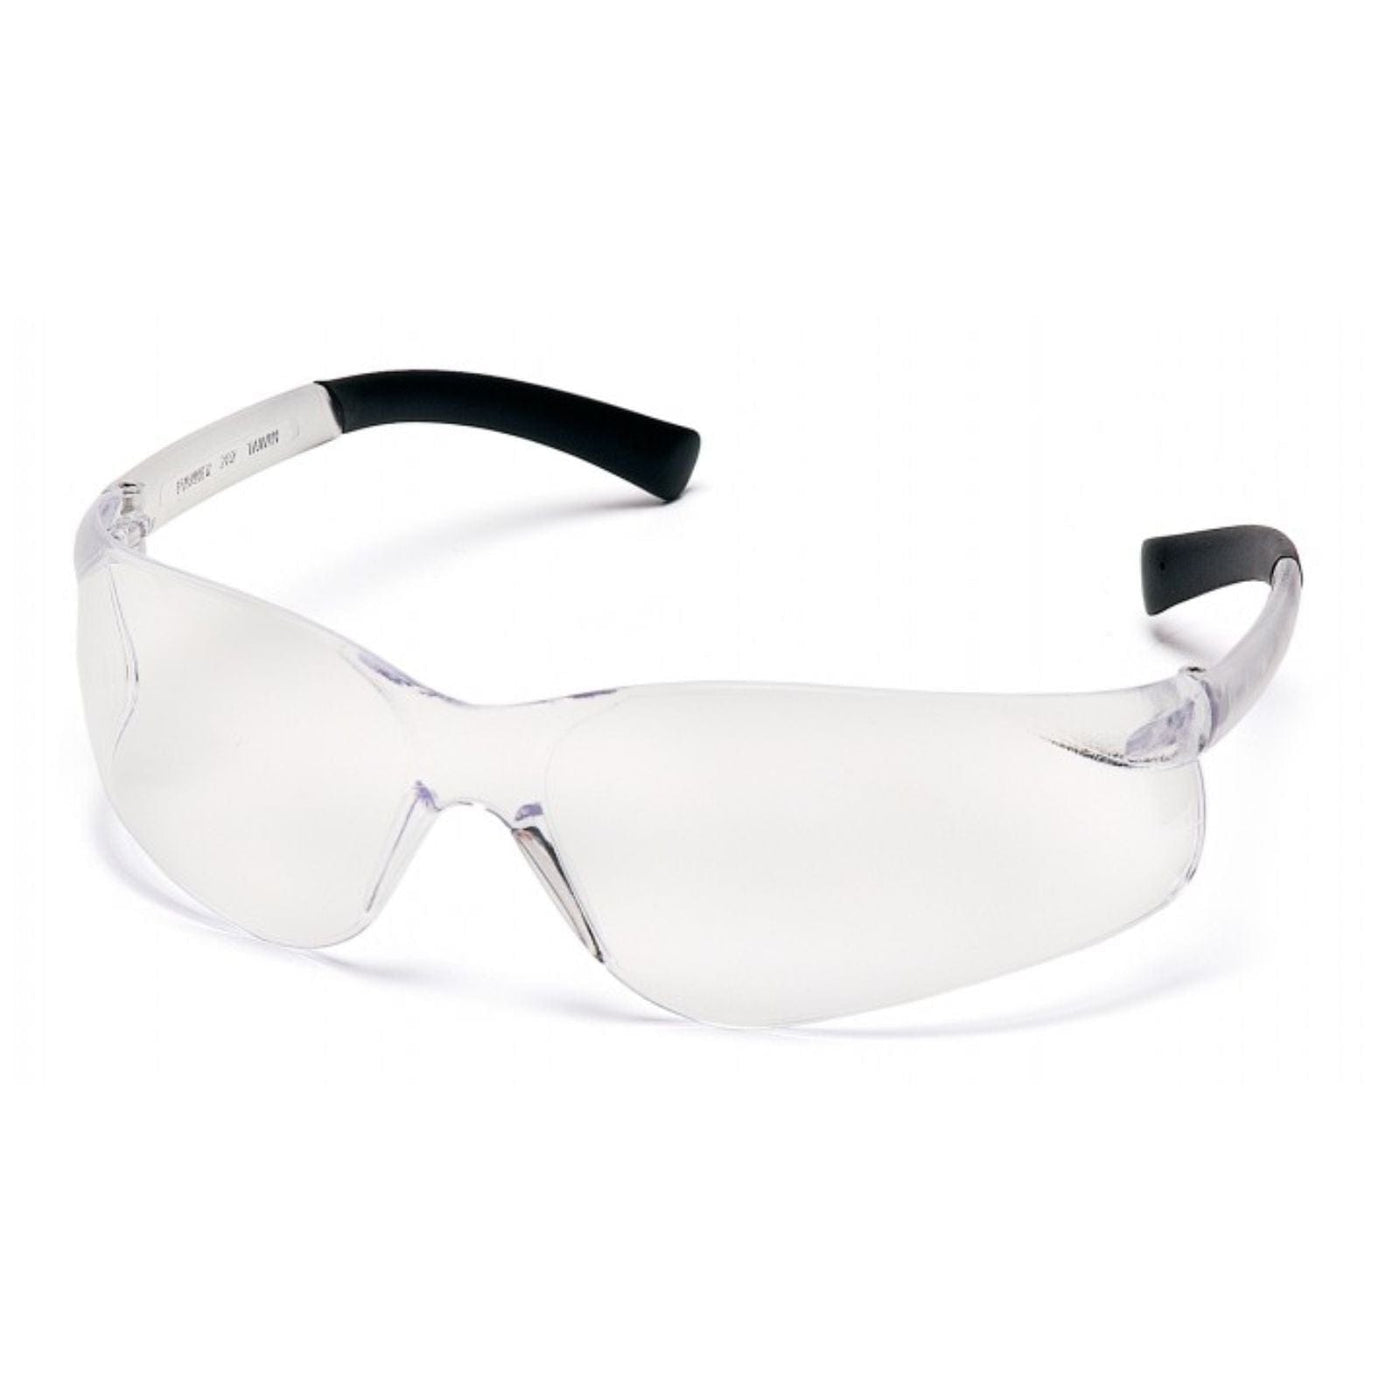 PYRAMEX SAFETY PRODUCTS Pyramex Ztek Safety Glasses Clear Frame Lens AntiFog Apparel